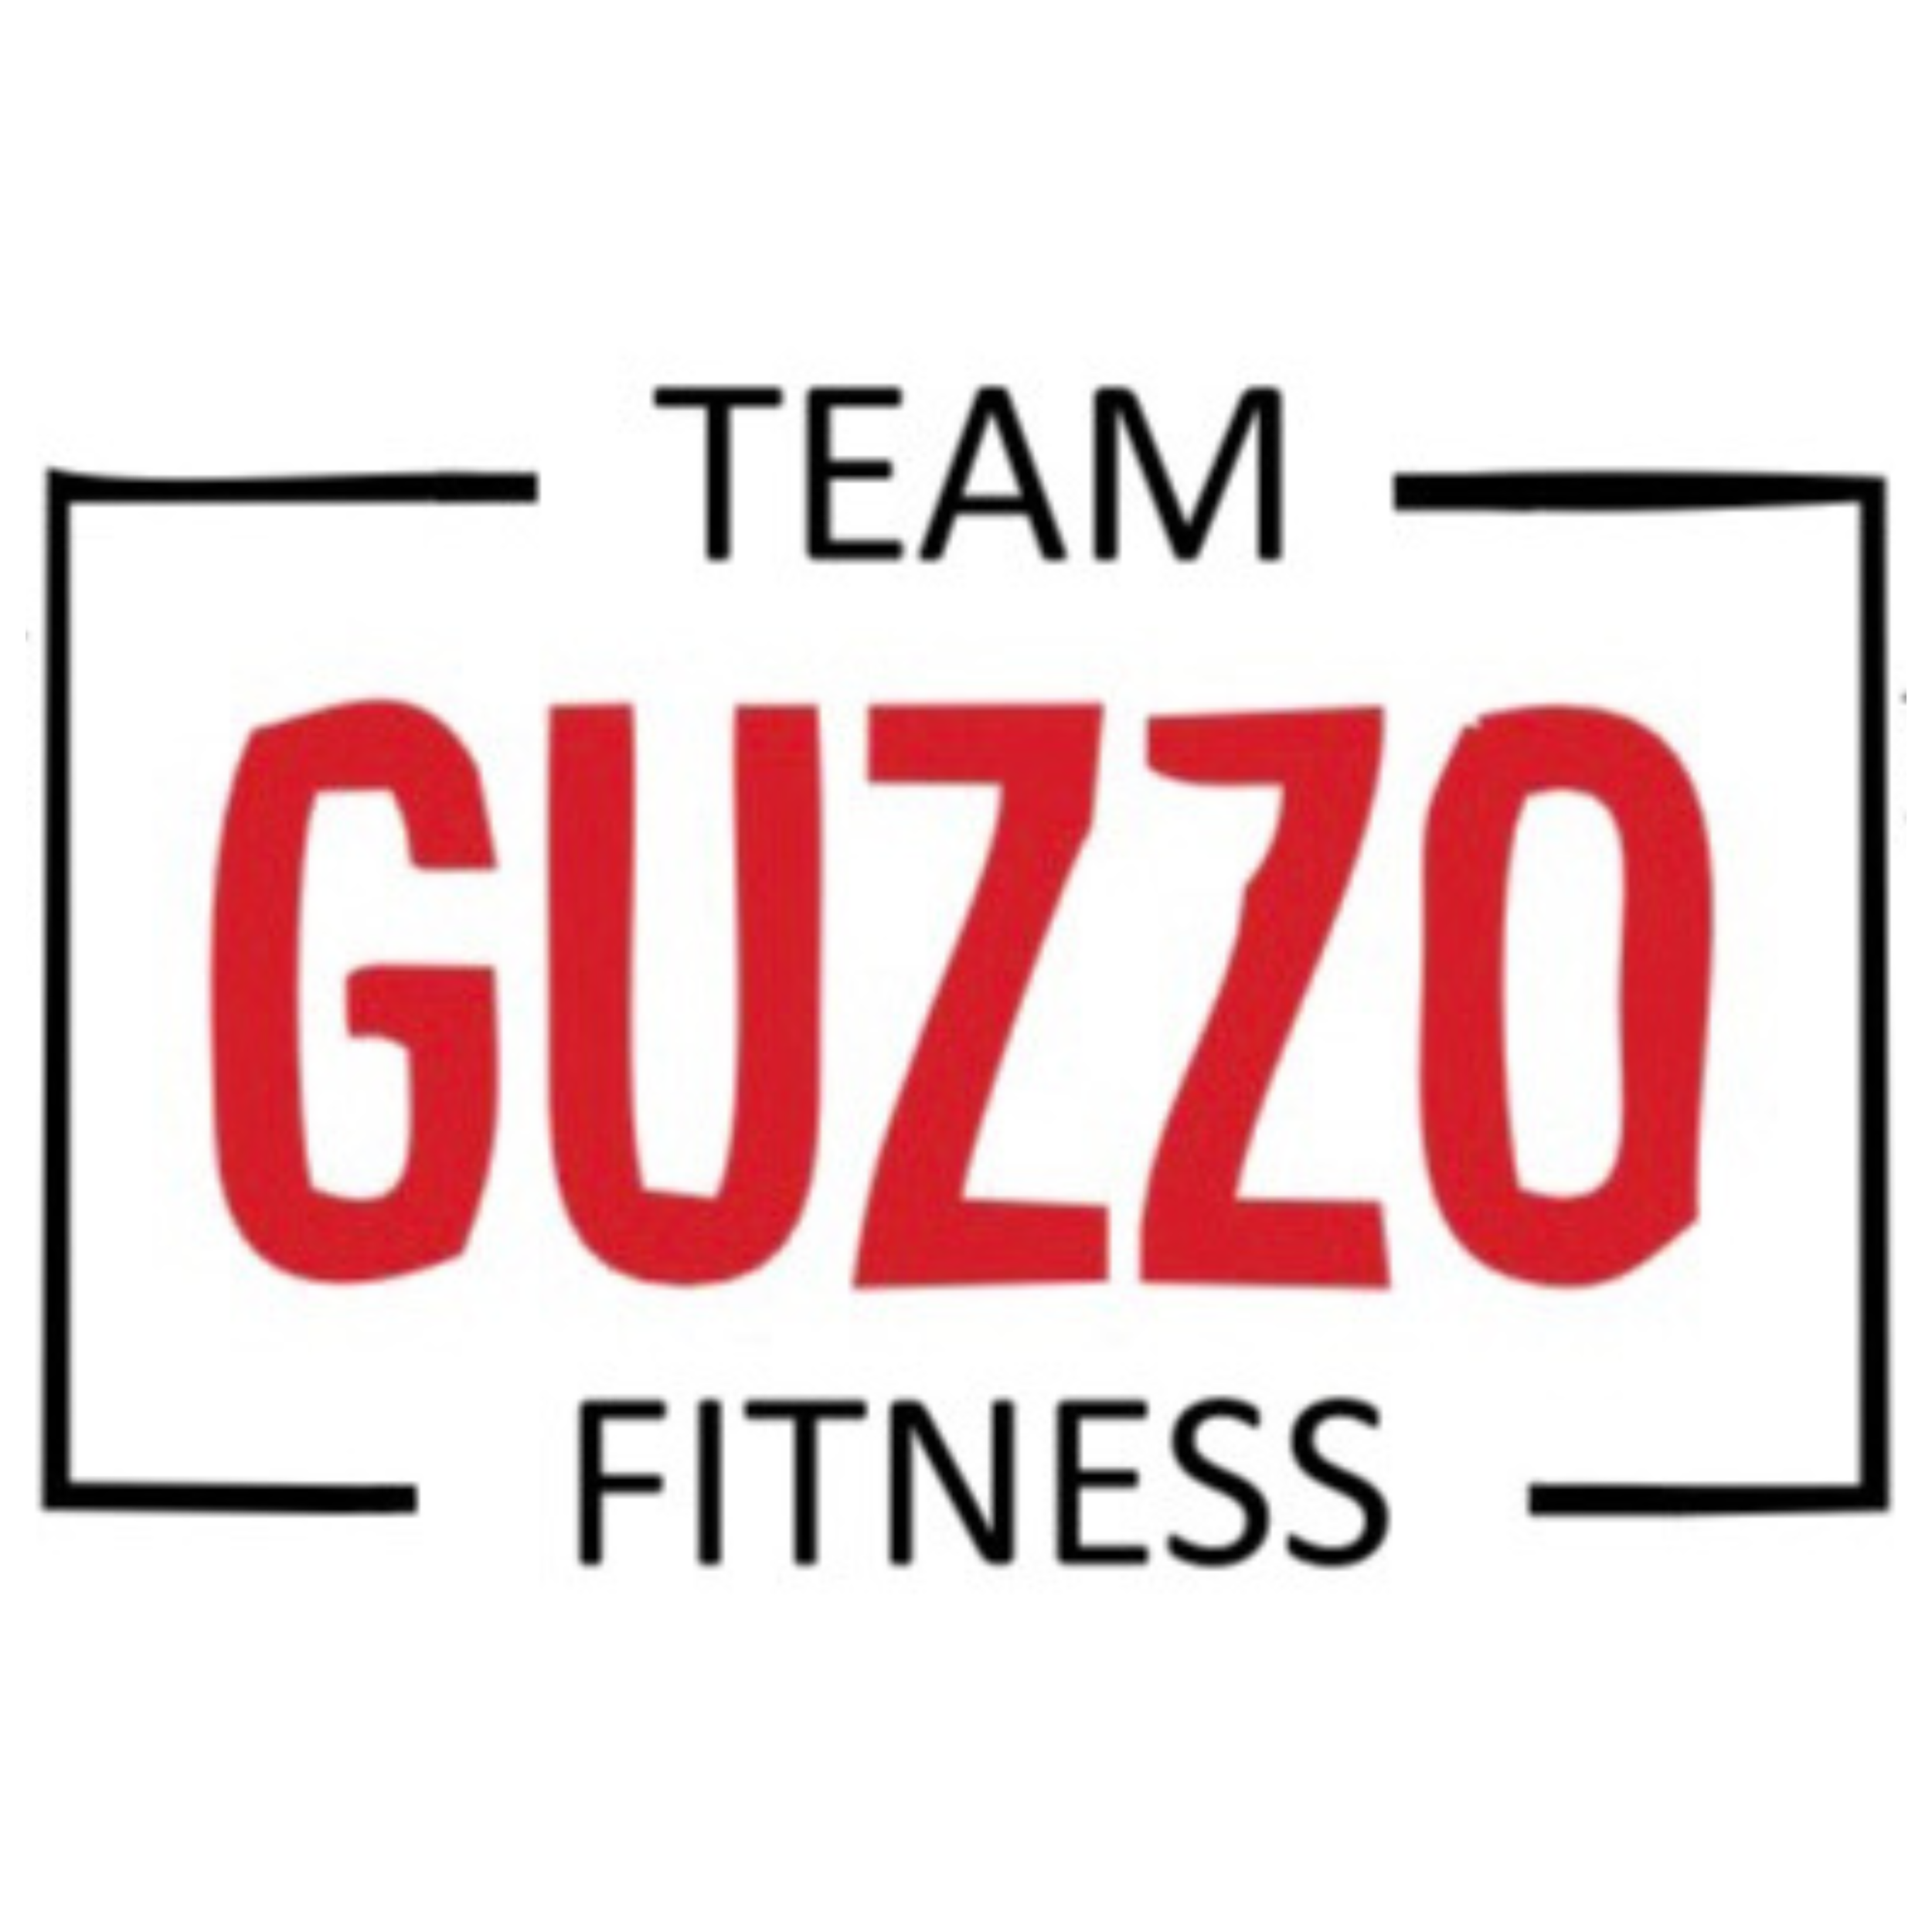 Guzzo Fitness Systems